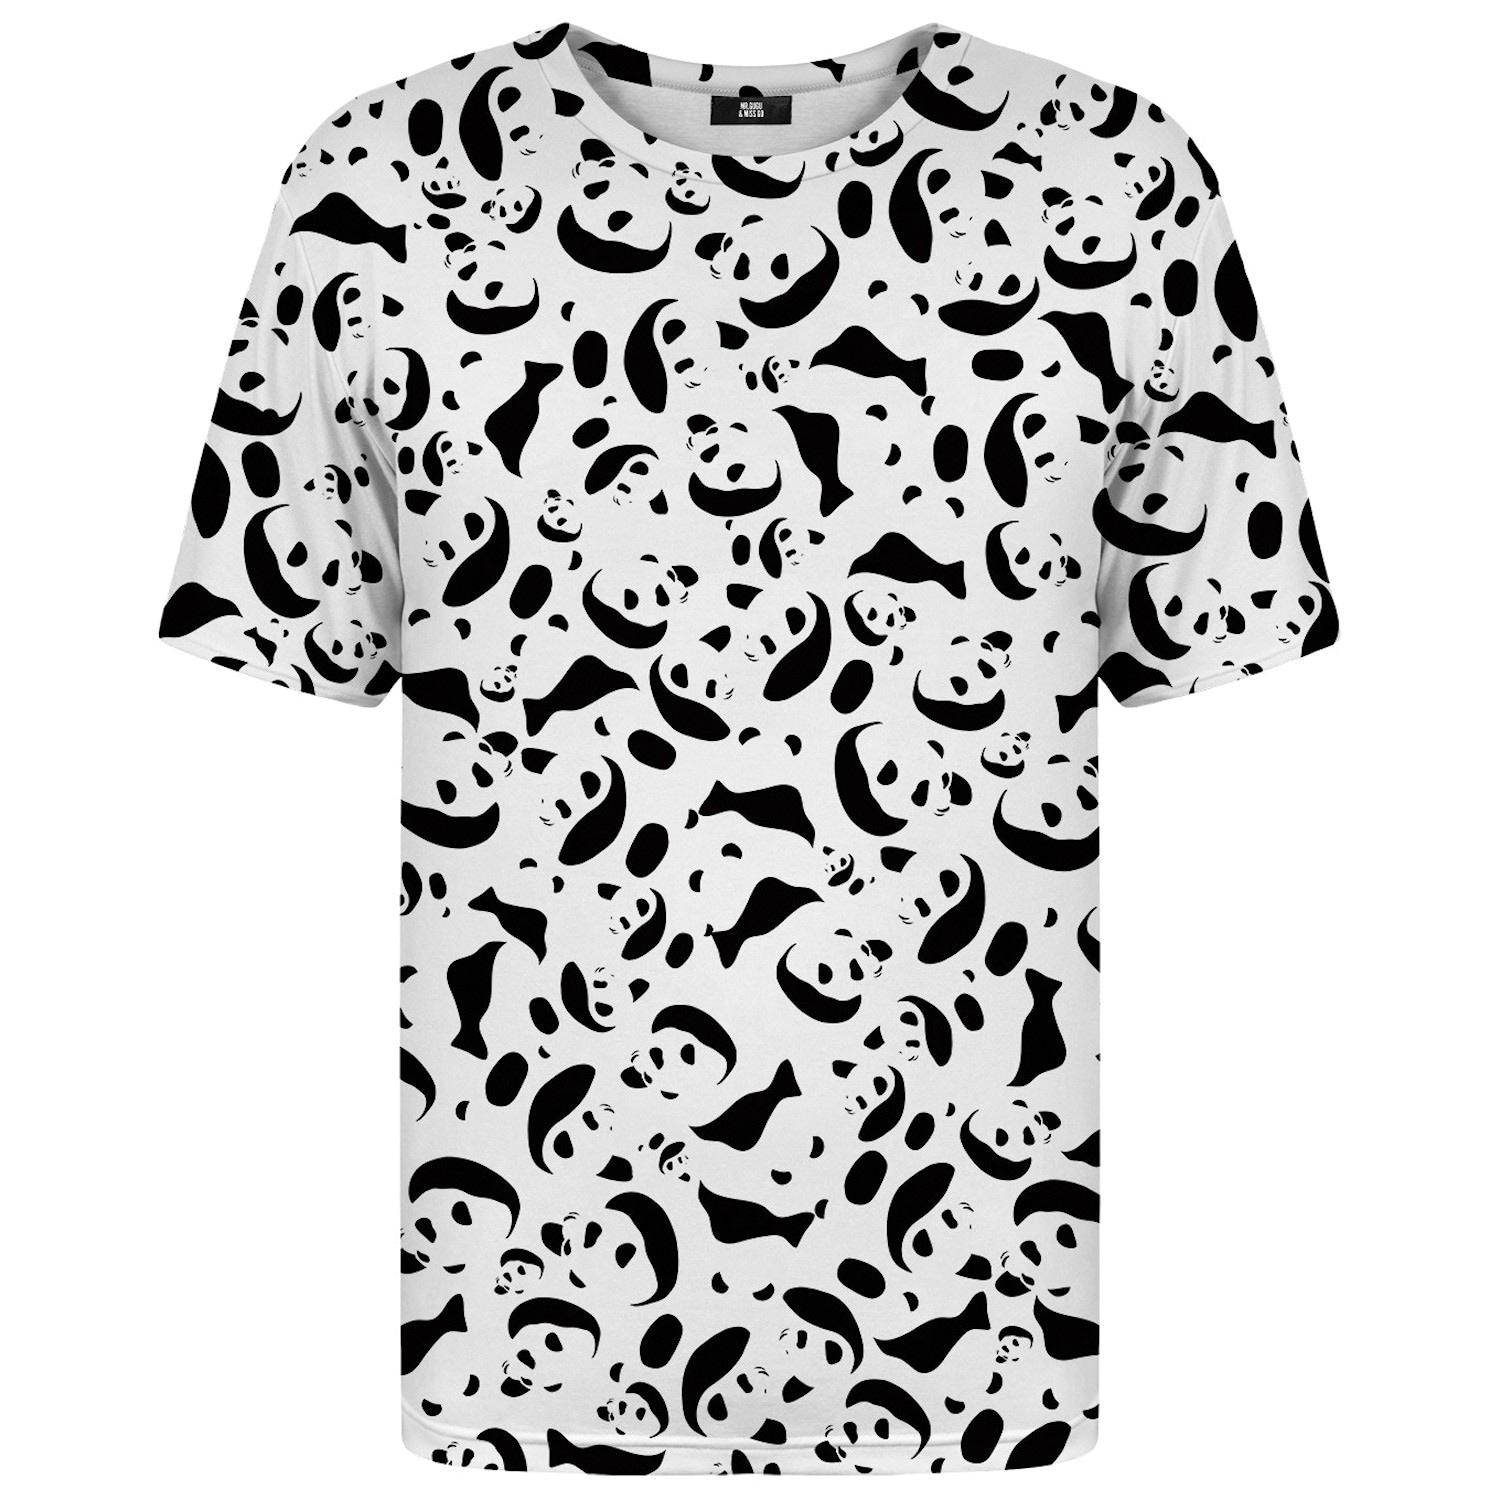 Betere Shop WHAT ON EARTH Men's Panda Bear T-Shirt Top - Black and White LJ-41